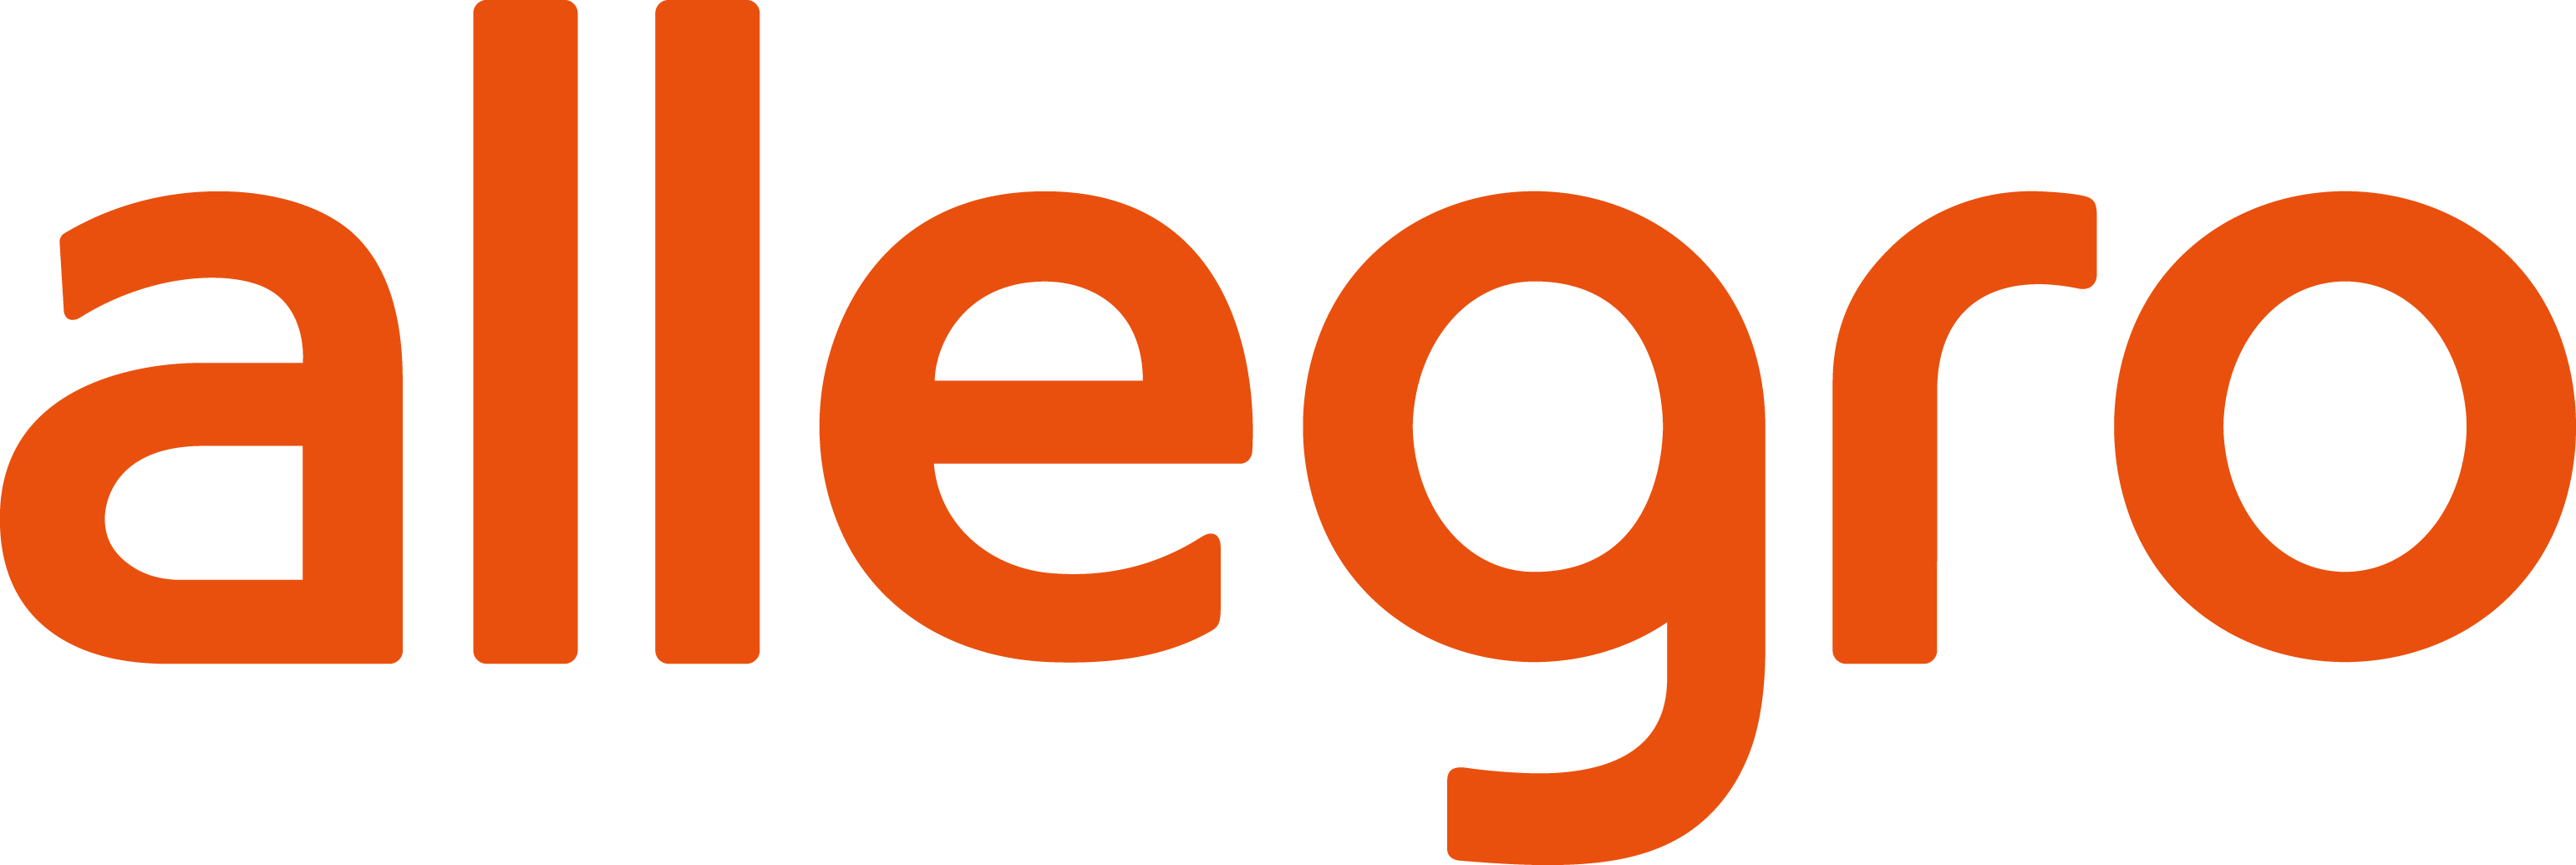 Allegro Logo png